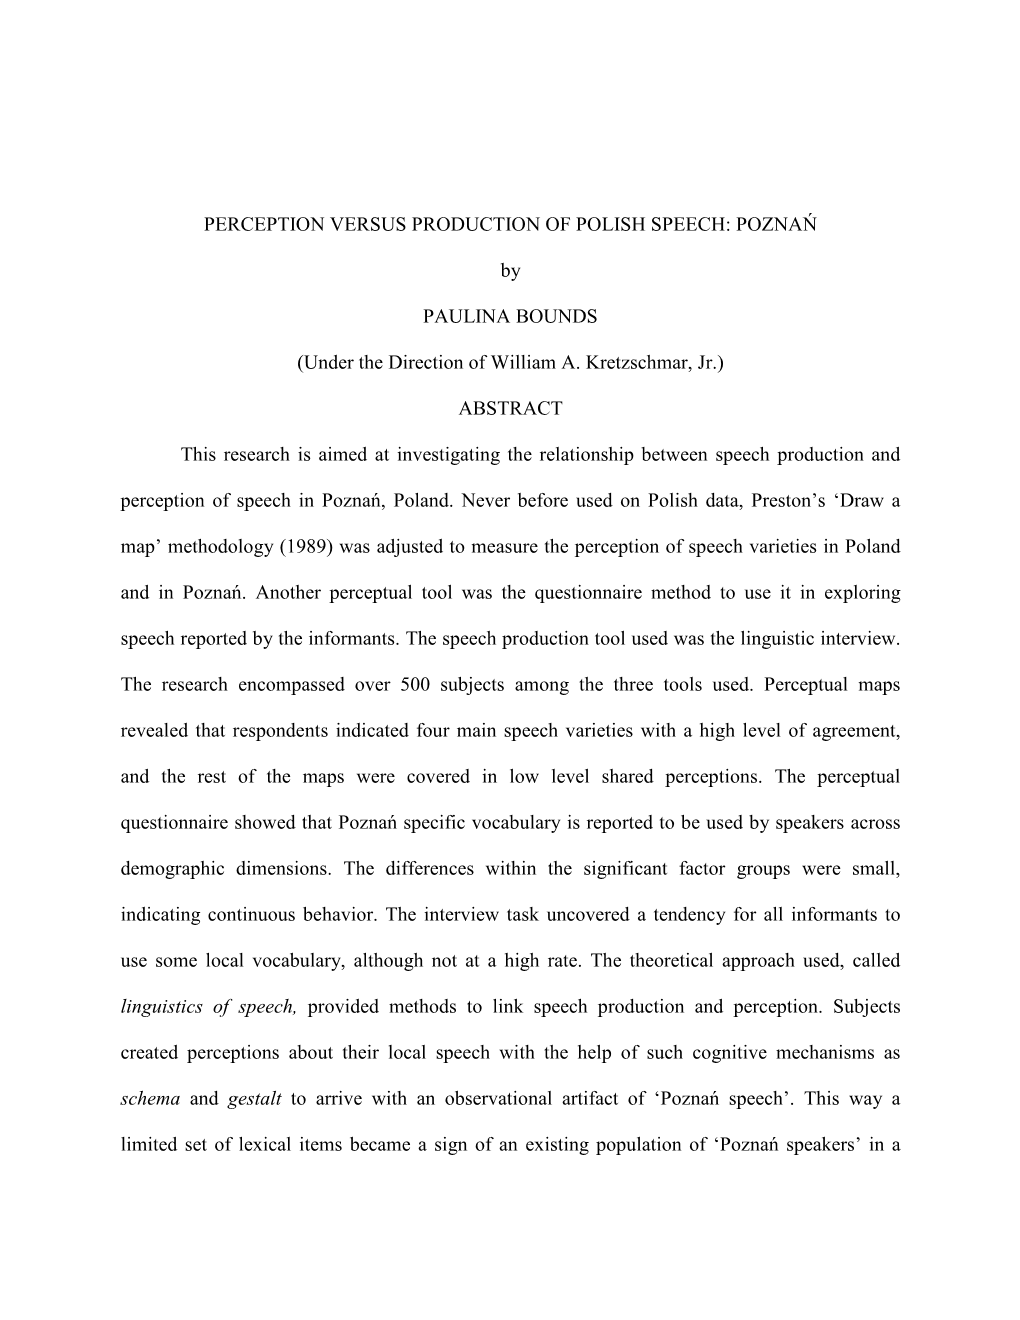 Perception Versus Production of Polish Speech: Poznań